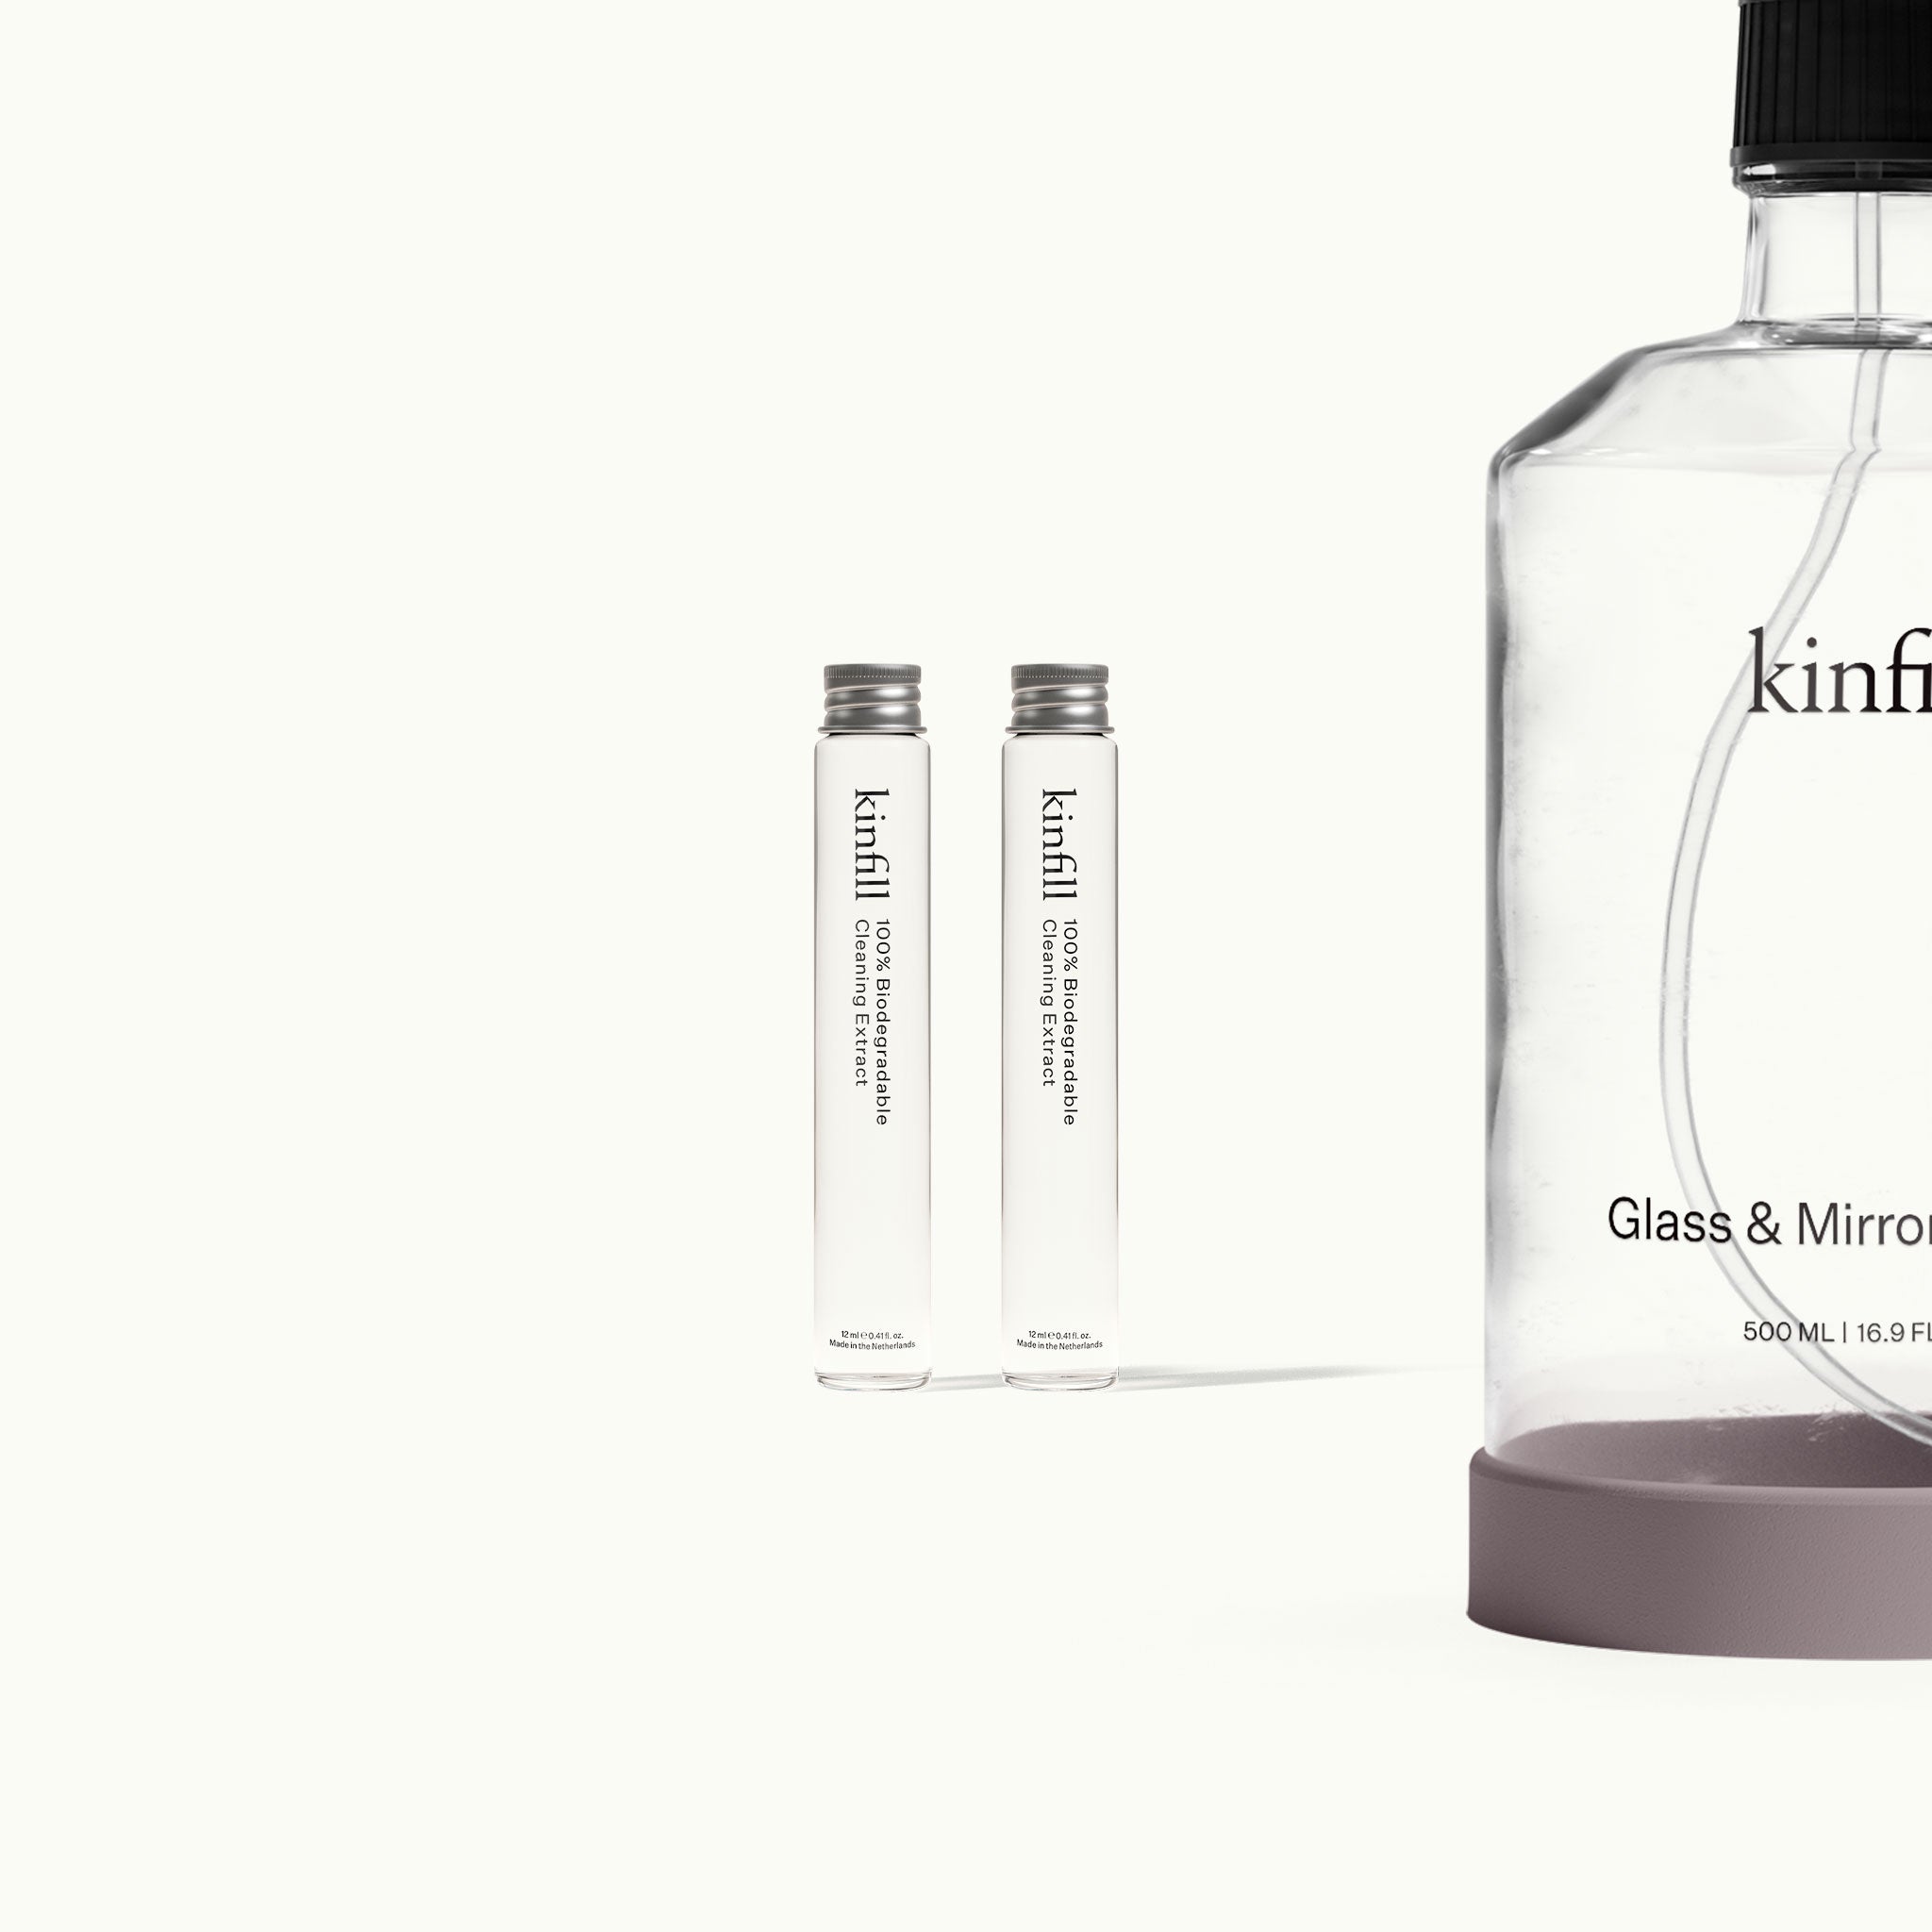 kinfill-glass-mirror-cleaner-refills.jpg